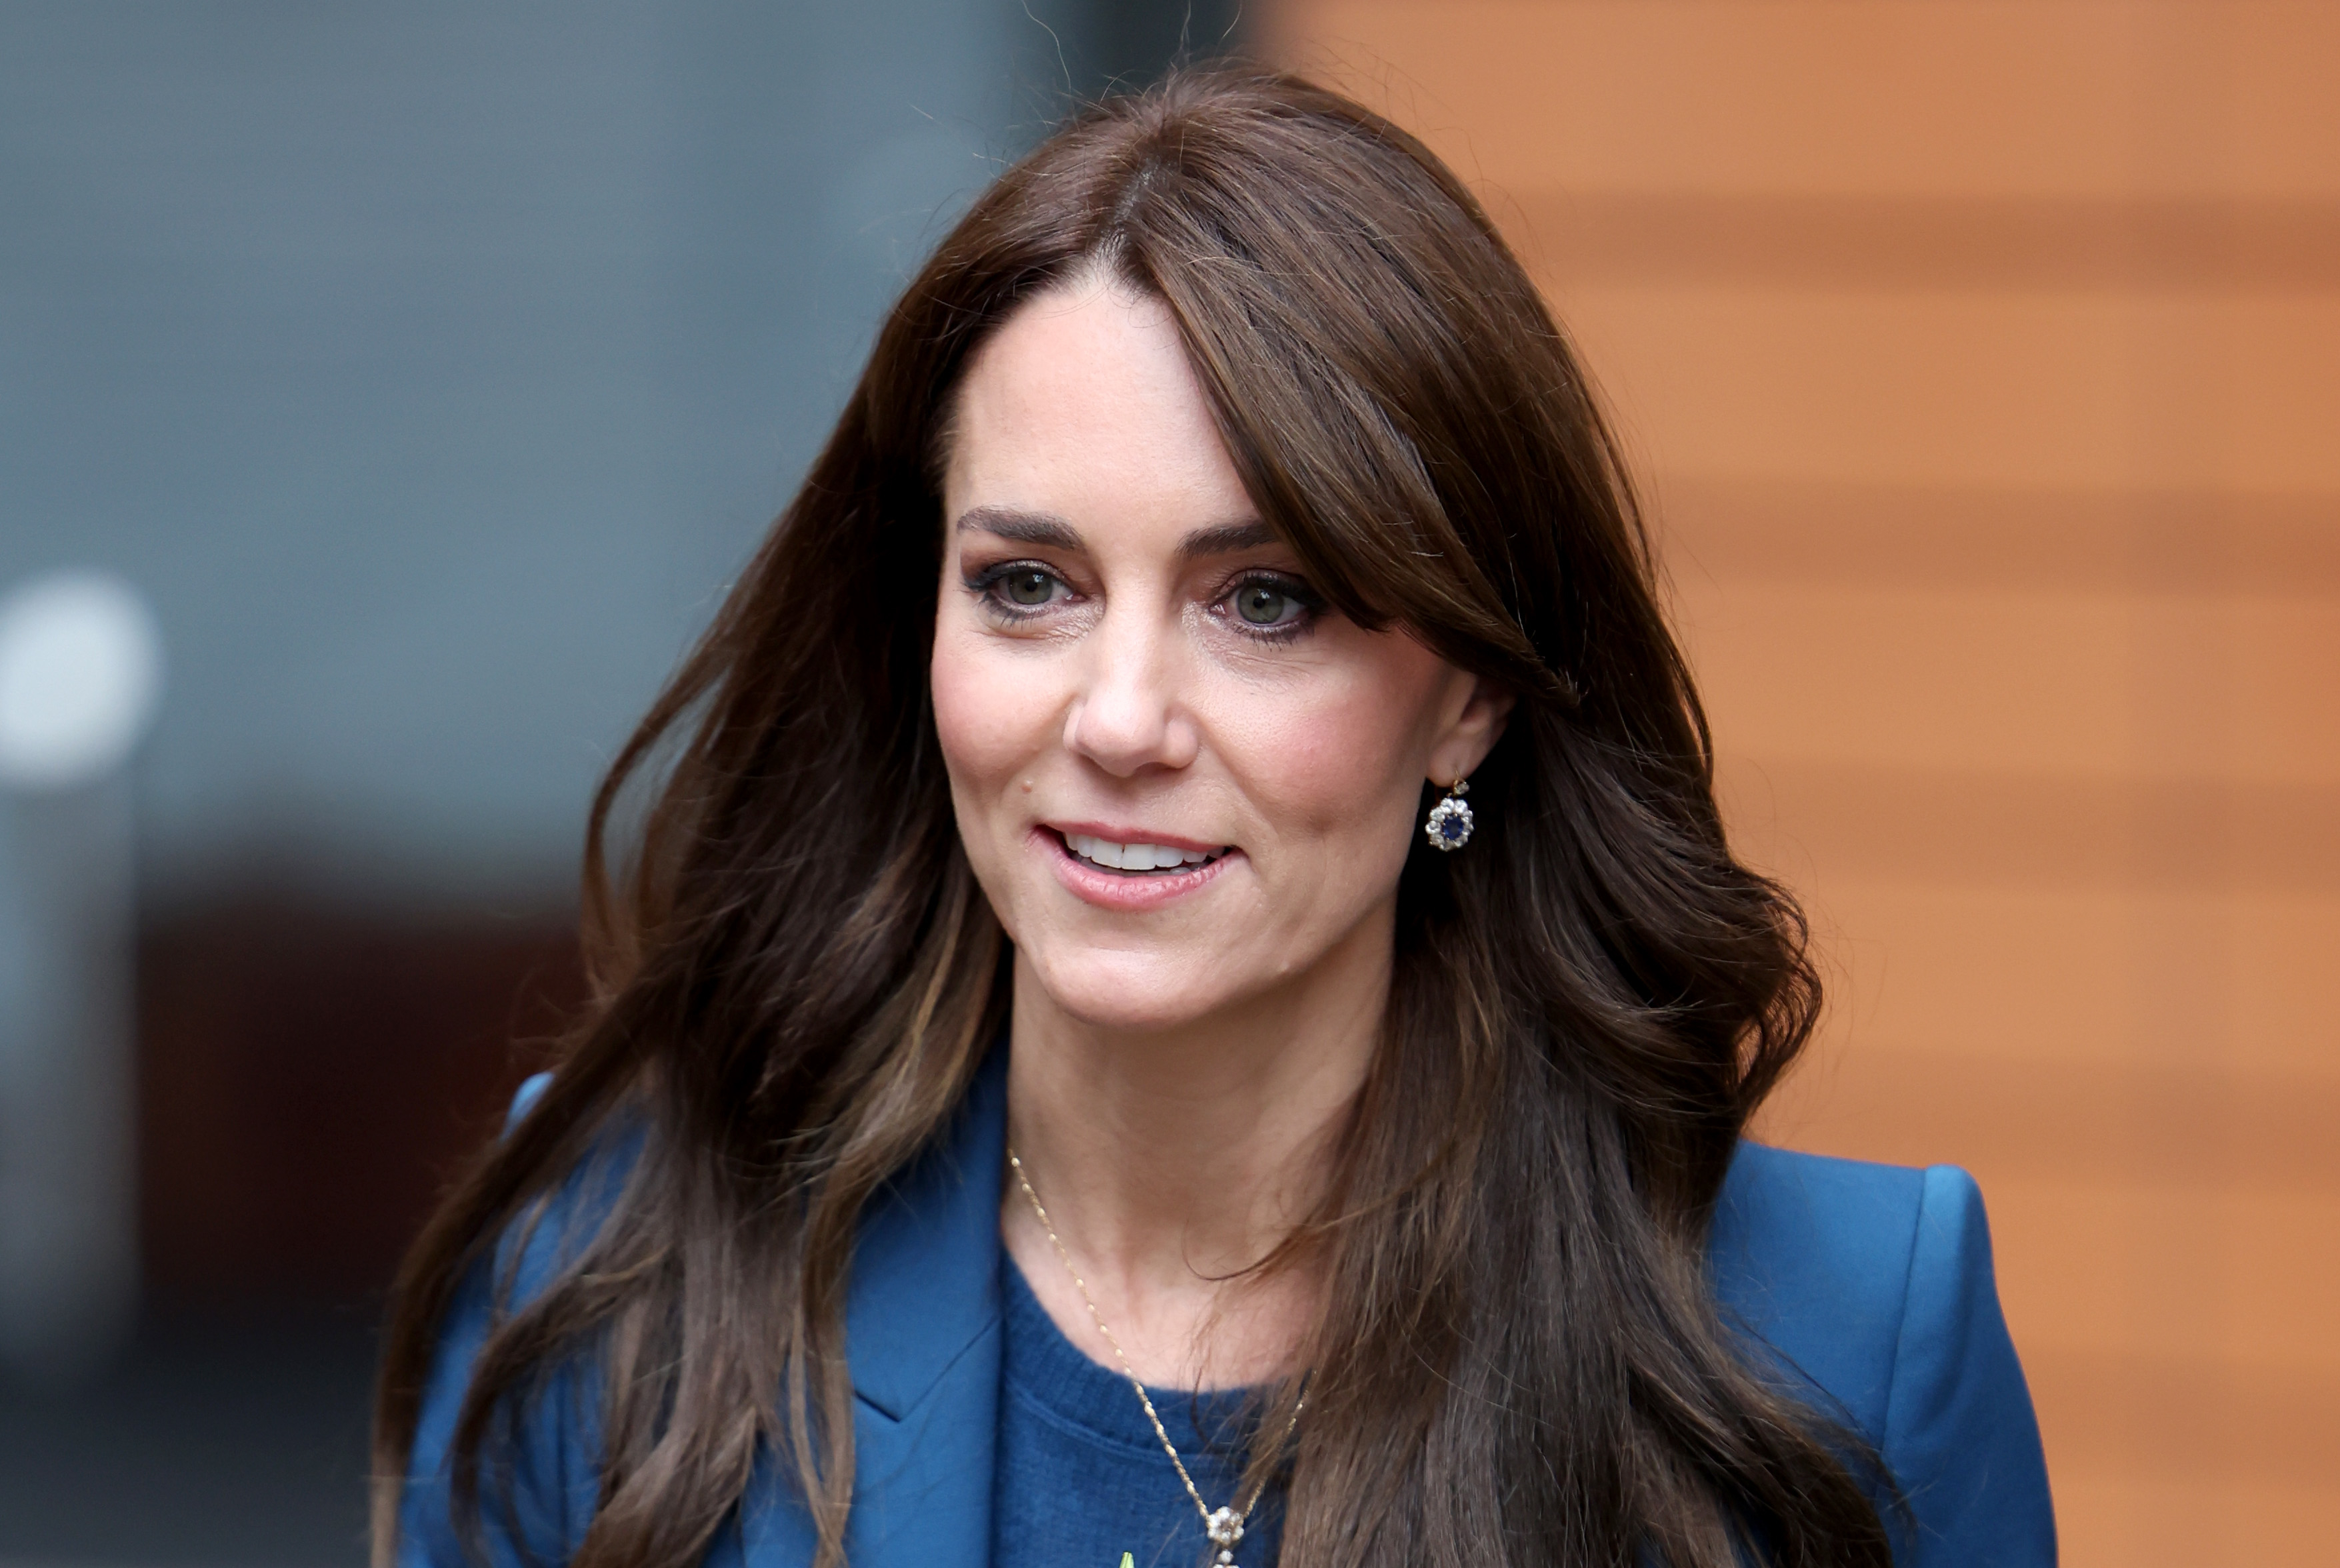 Kate Middleton wearing a blazer and drop earrings